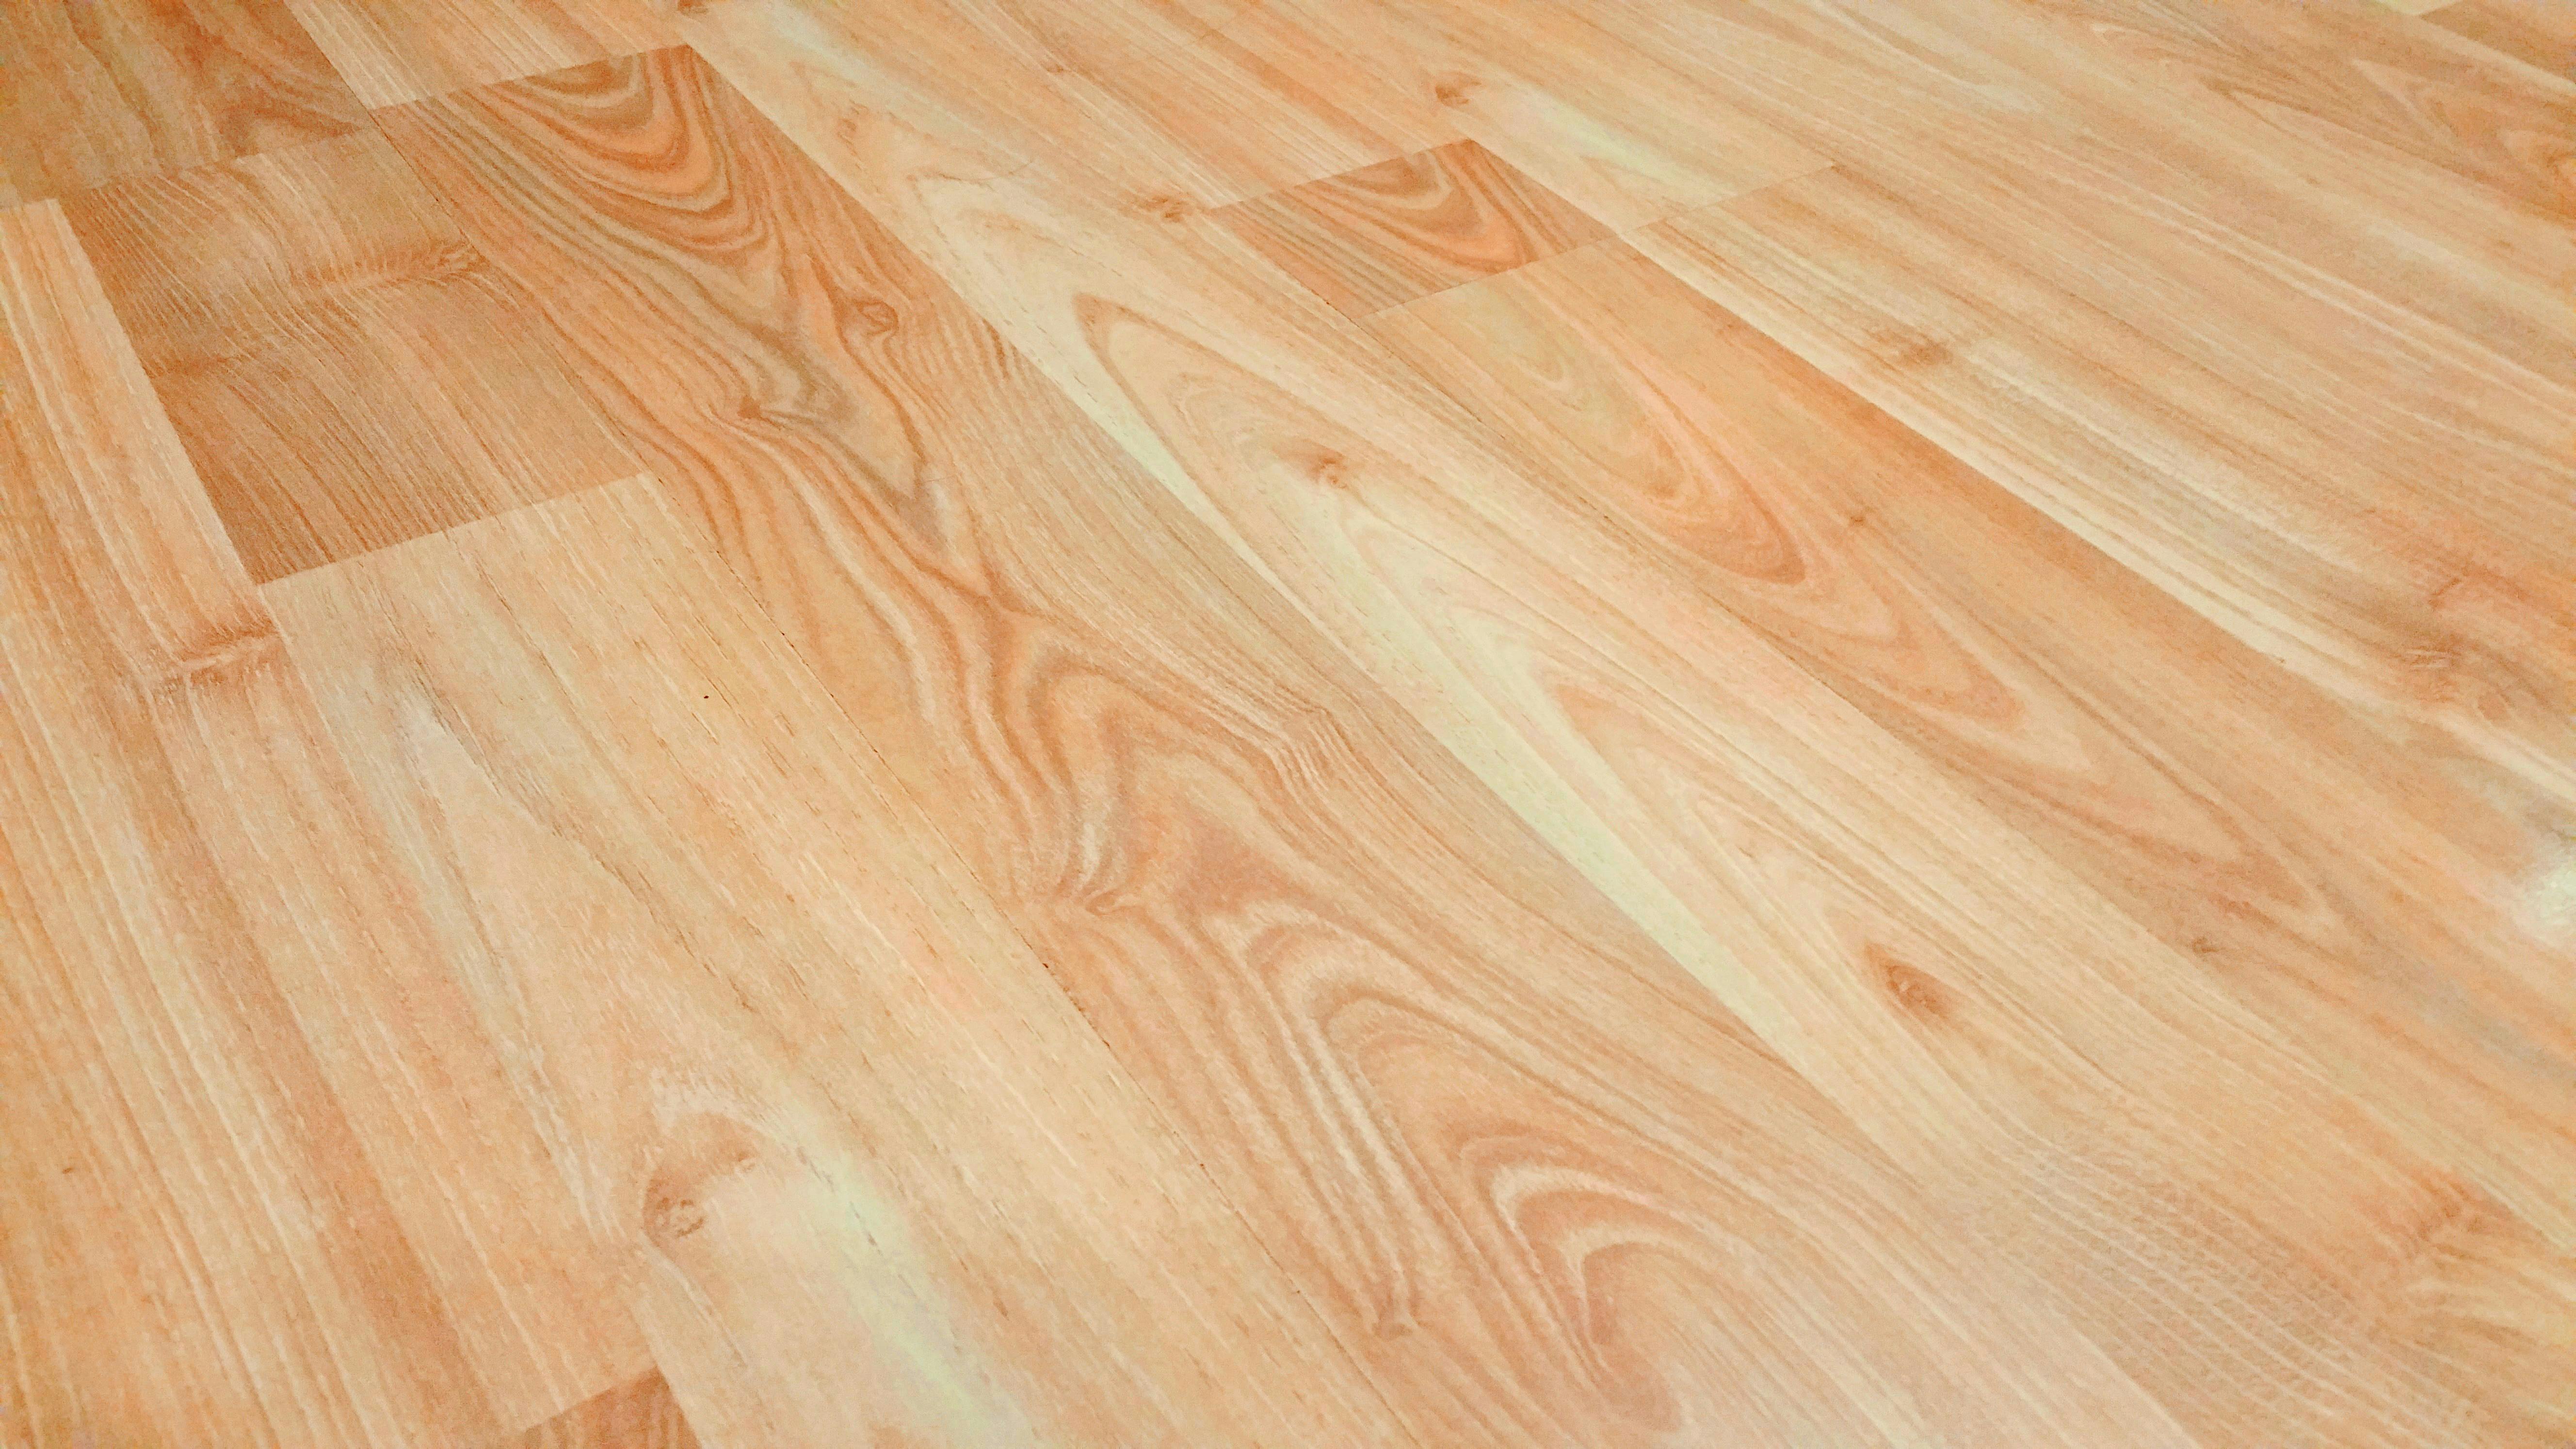 Brown Wooden Parquet Flooring · Free Stock Photo